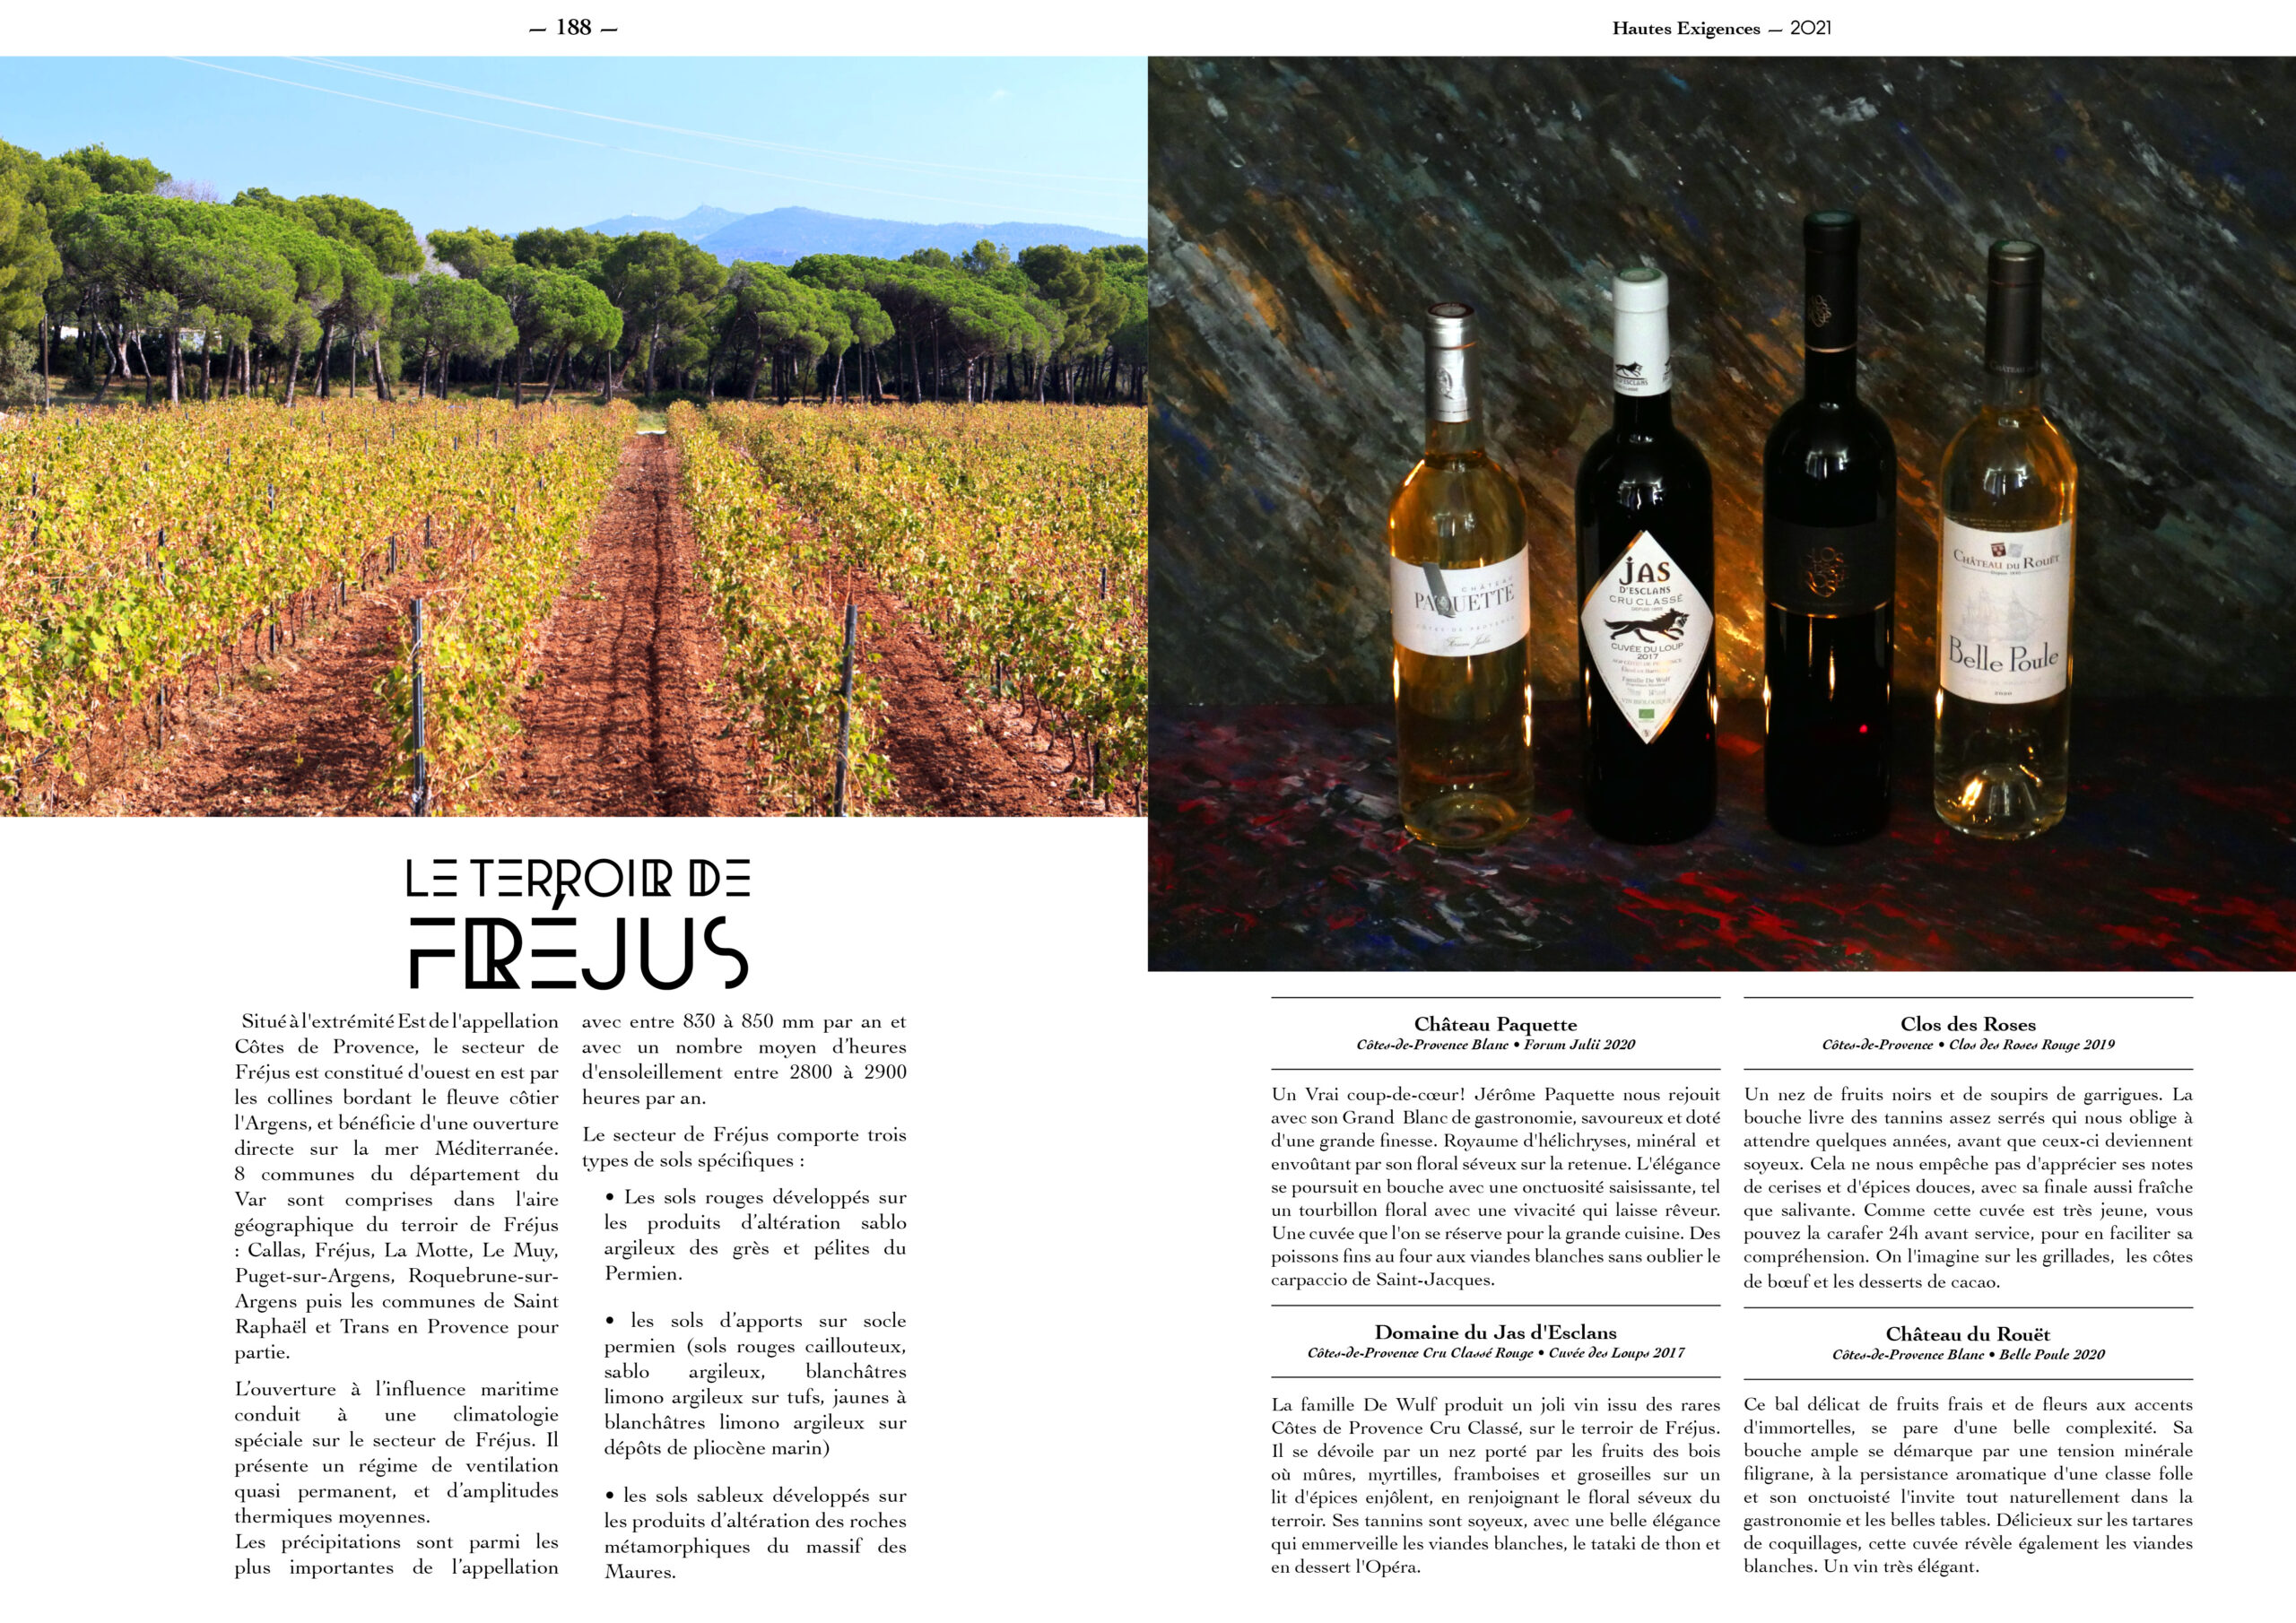 Hautes Exigences Magazine Hors Serie 2021 page 186-187